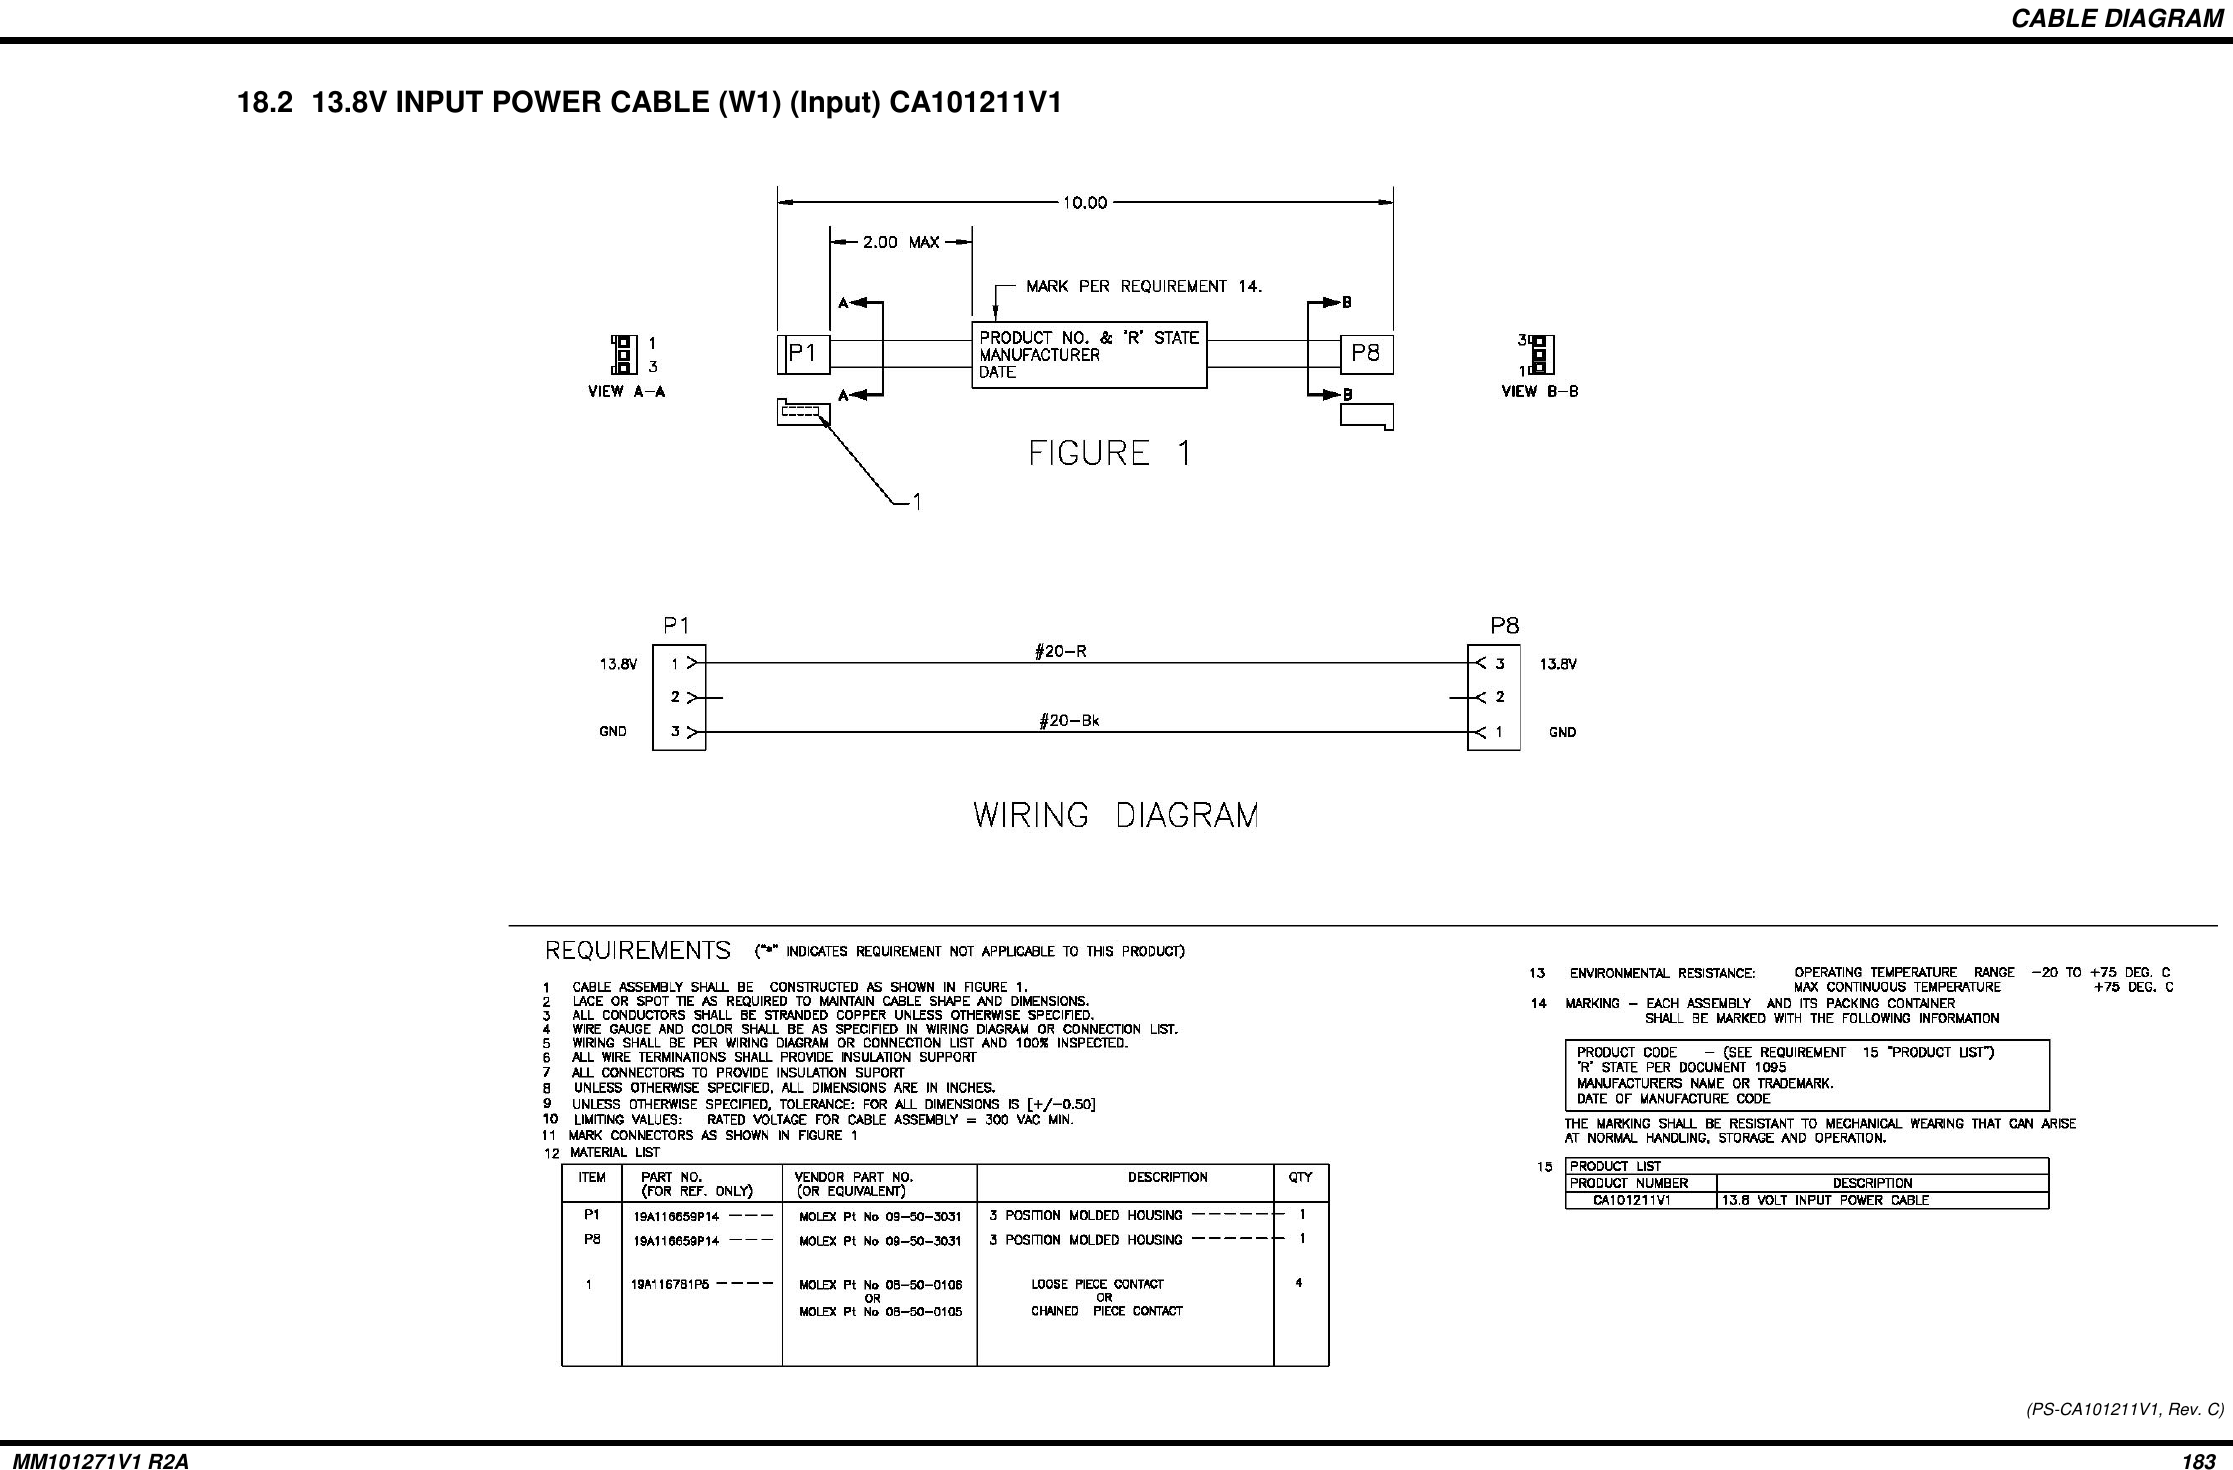 CABLE DIAGRAMMM101271V1 R2A 18318.2  13.8V INPUT POWER CABLE (W1) (Input) CA101211V1(PS-CA101211V1, Rev. C)